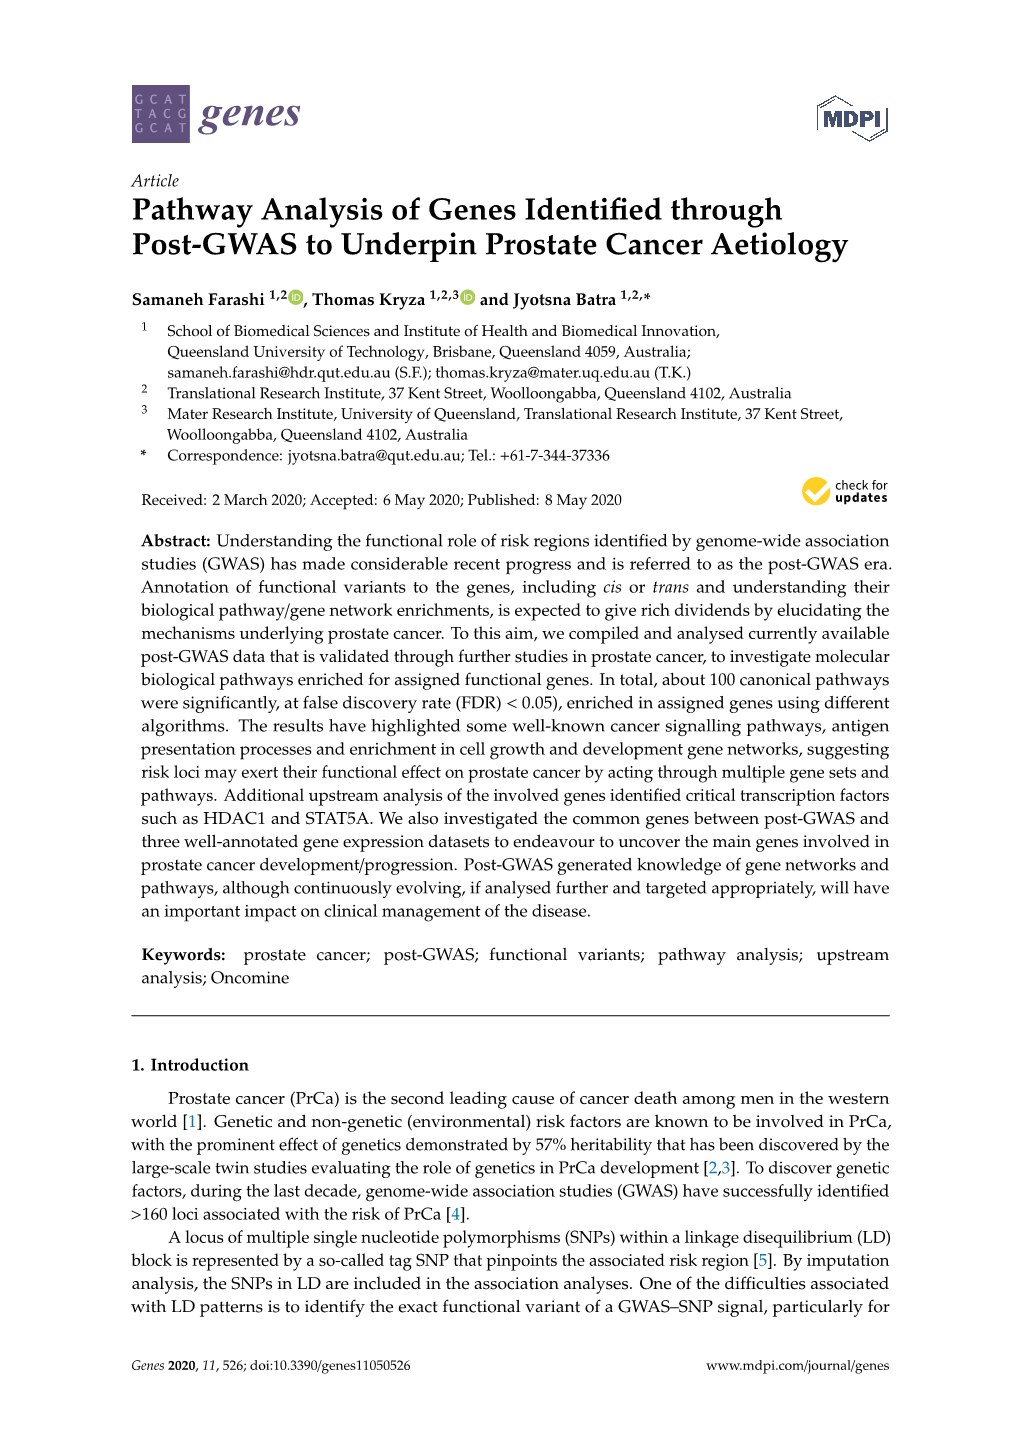 Pathway Analysis of Genes Identified Through Post-GWAS To